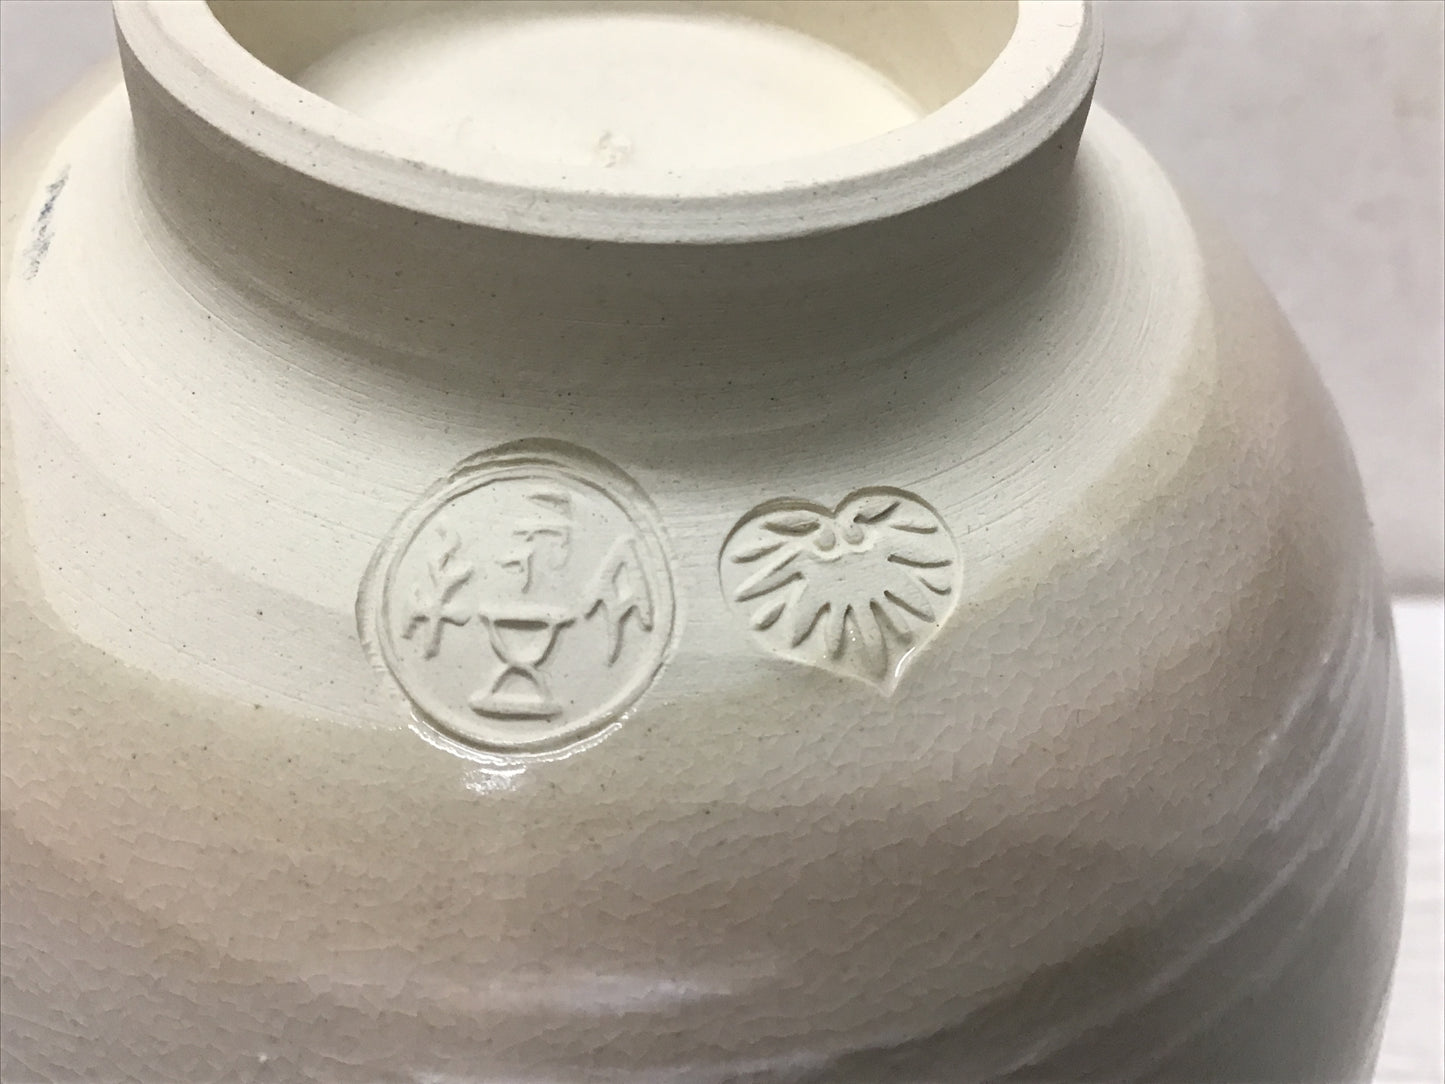 Y1763 CHAWAN Inuyama-ware signed box Japanese bowl pottery Japan tea ceremony